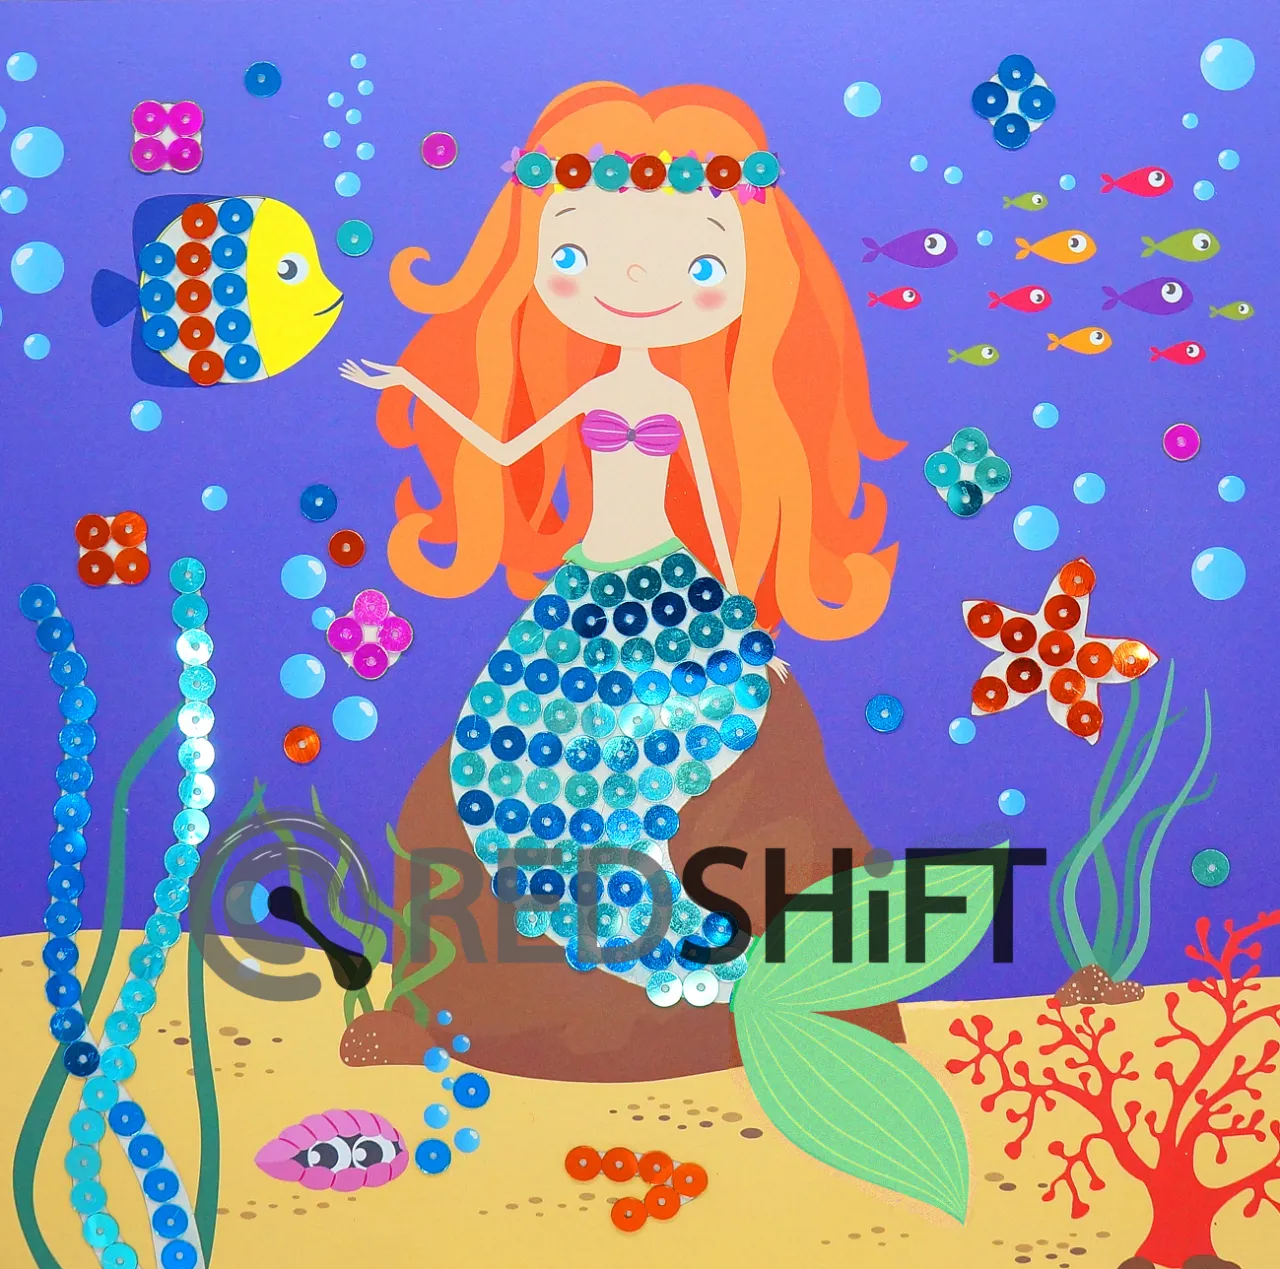 Sequin Mermaid kids child paper art and craft kit diy toy puzzle sticker set